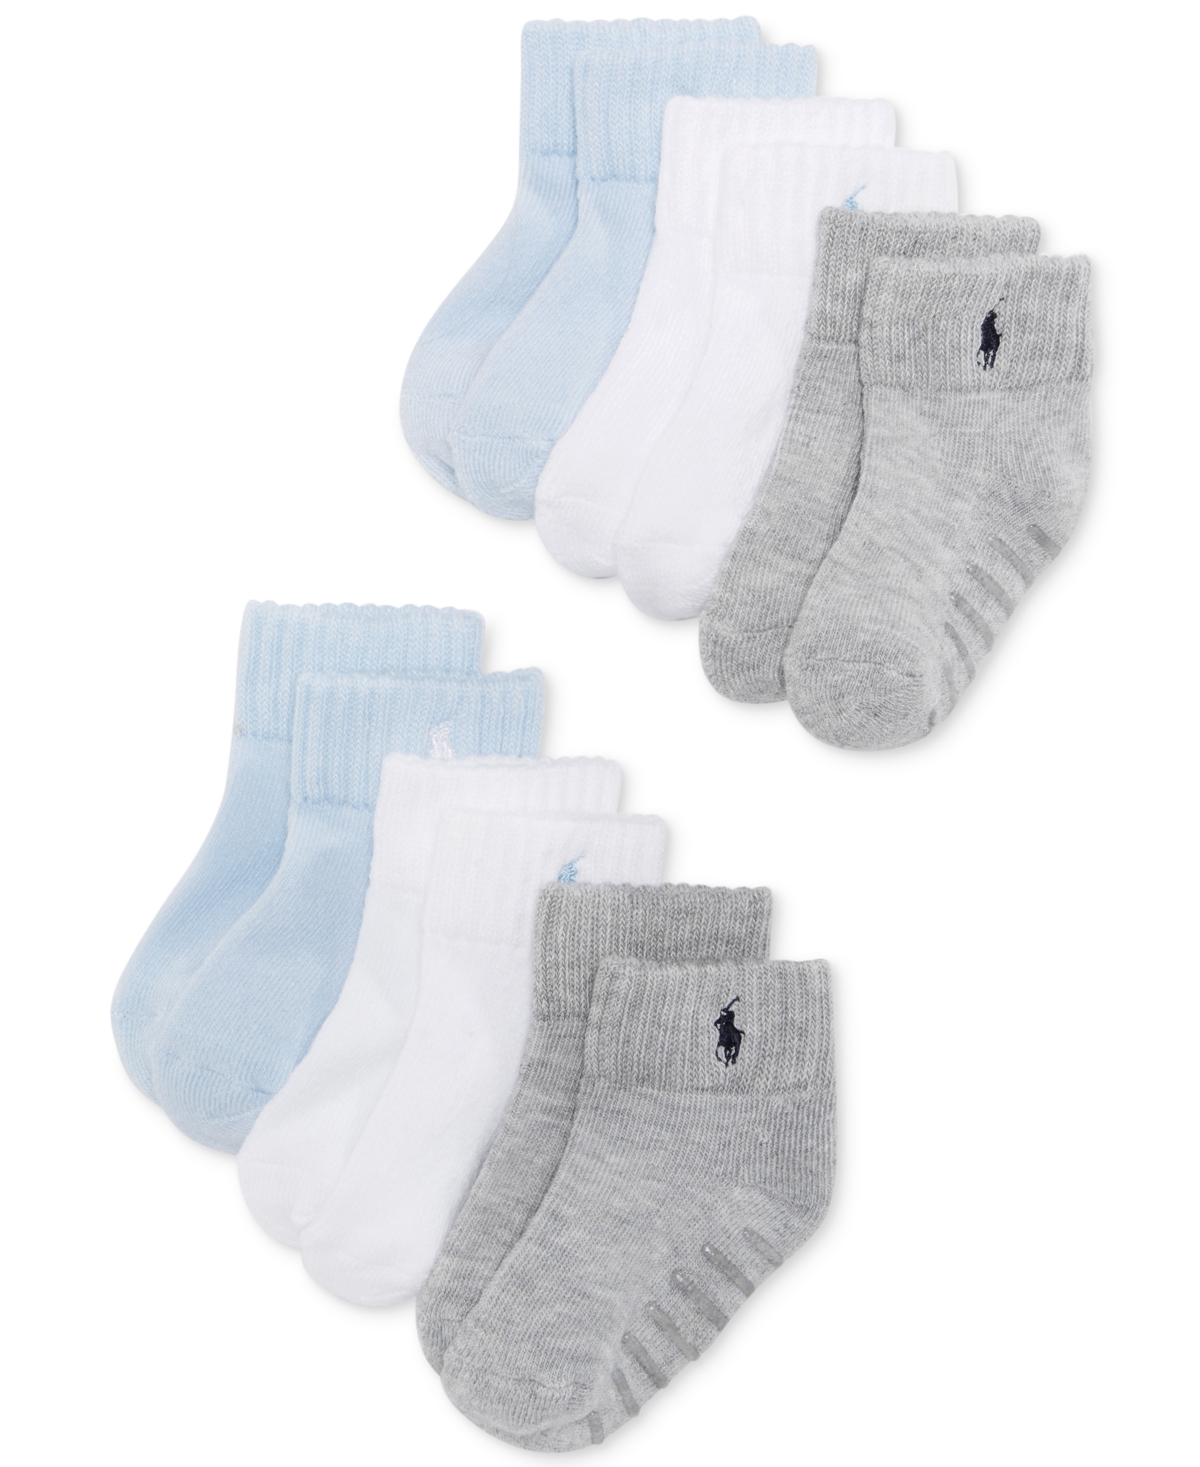 Polo Ralph Lauren Ralph Lauren Baby Boys Or Baby Girls Low Cut Socks, 6 Pack In Blue,white,grey